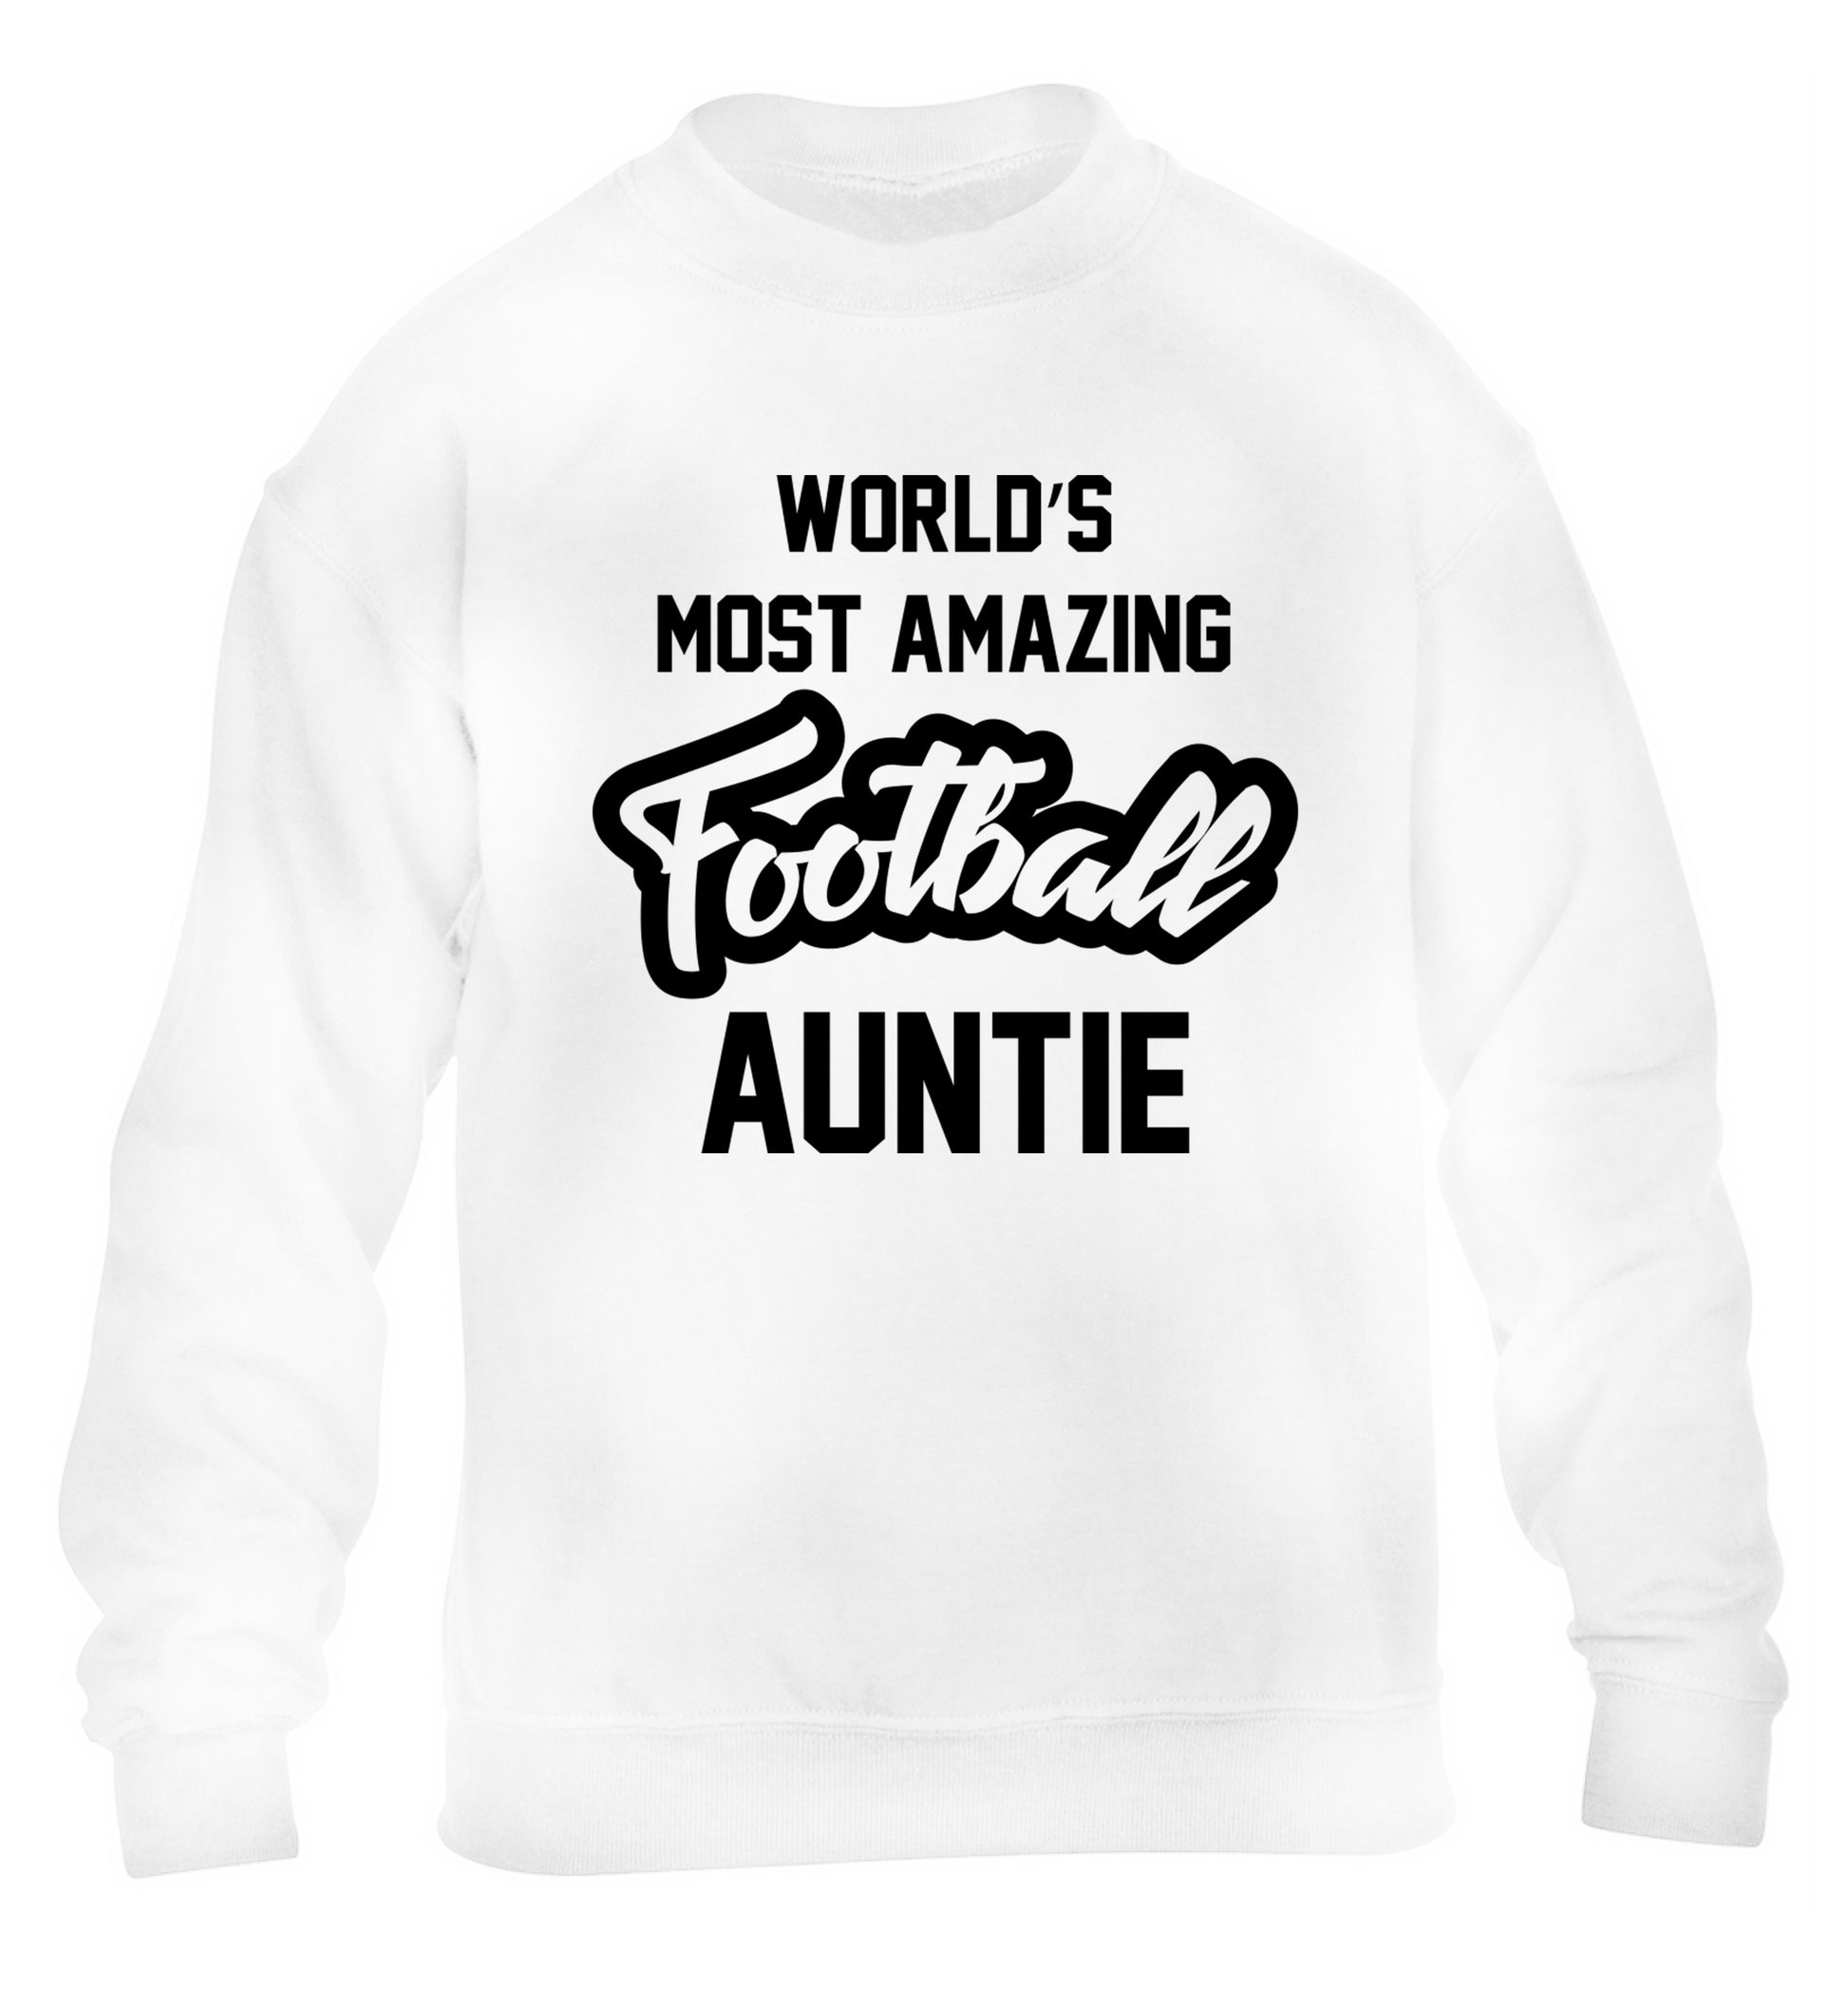 Worlds most amazing football auntie children's white sweater 12-14 Years